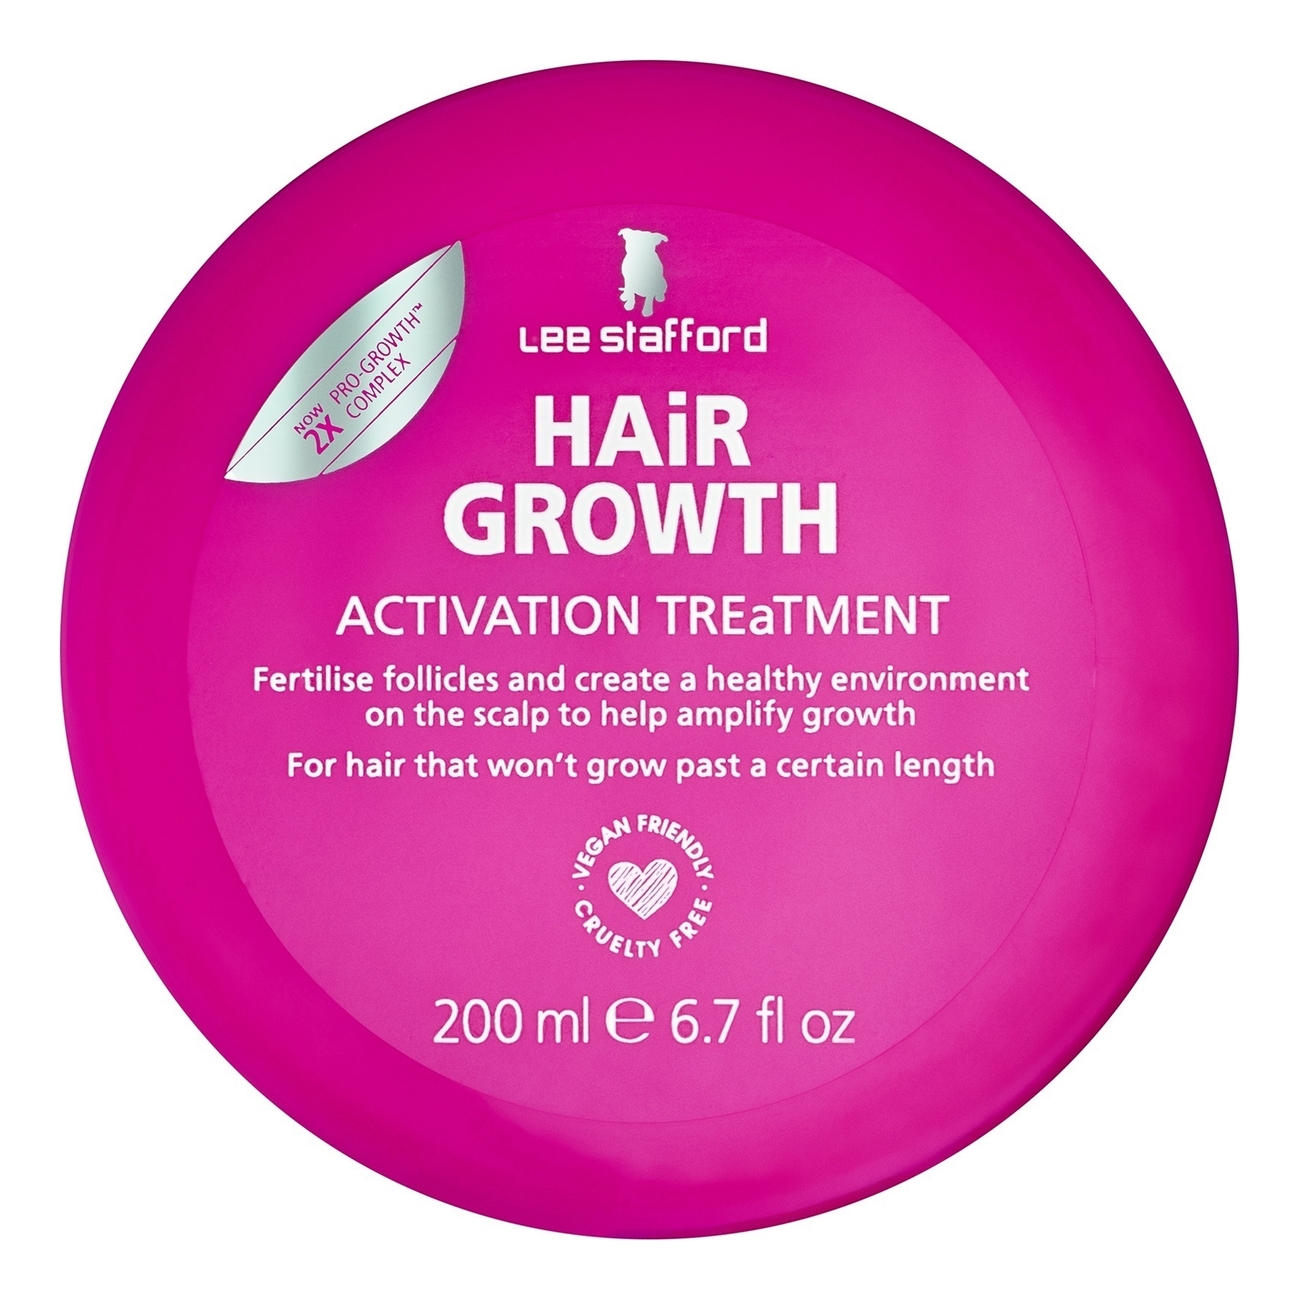 

Маска стимулирующая рост волос Hair Growth Activation Treatment 200мл